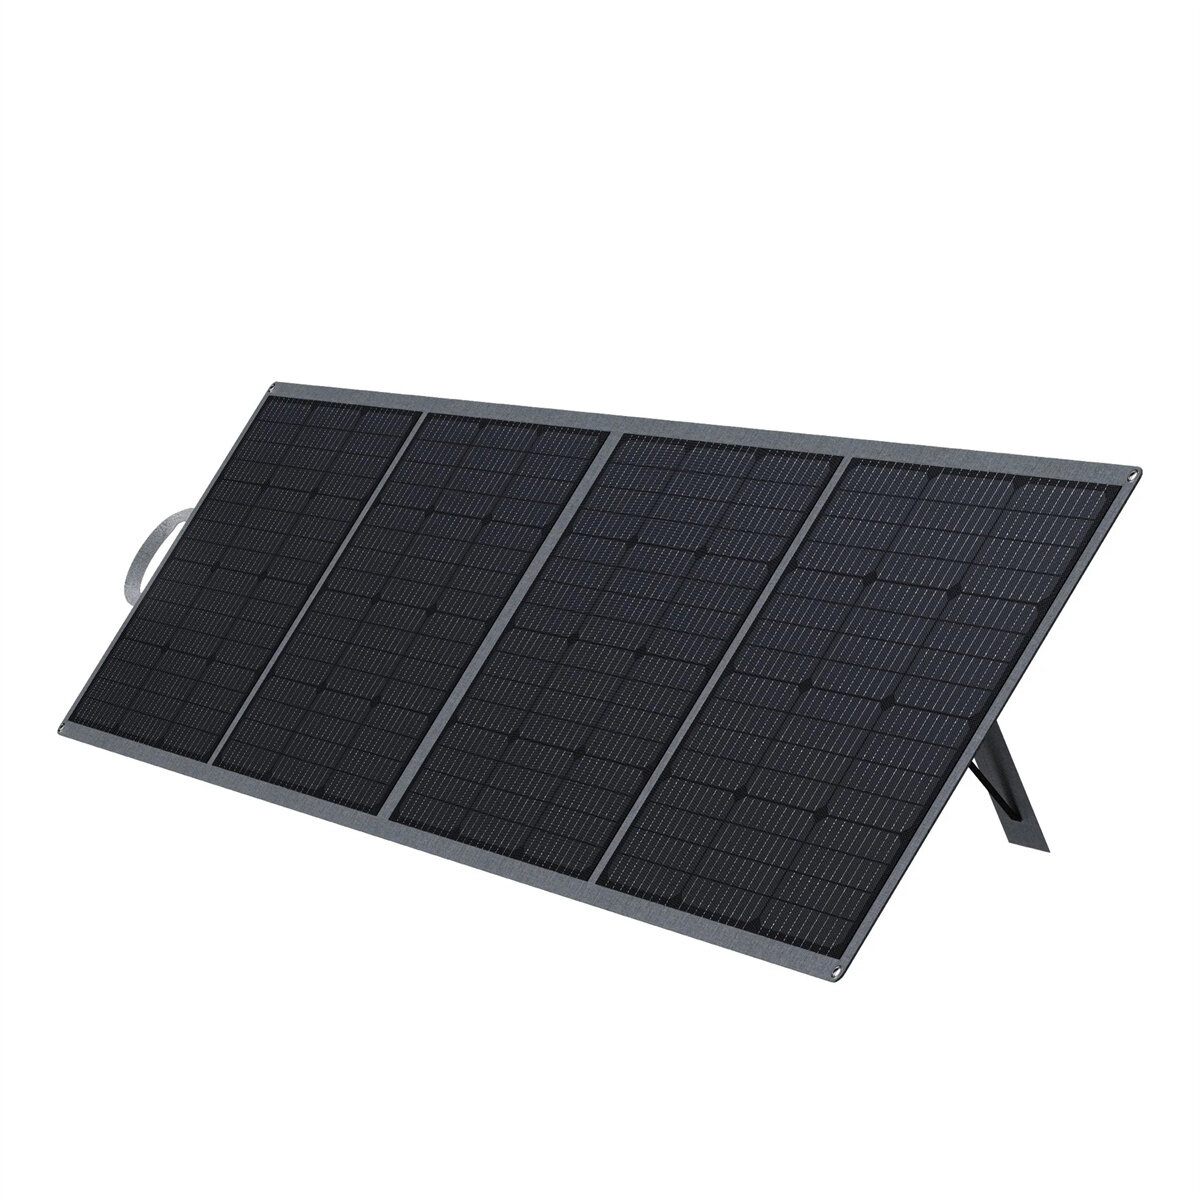 [EU Direct] DaranEner SP300 ETFE Solarpanel 300W für NEO2000 Solargenerator 5V-USB & 36,3V-Gleichstrom Solarmodule 22,0% Effizienz Tragbares faltbares Solarpanel für Terrasse, Wohnmobil, Camping im Freien, Stromausfall, Notfall